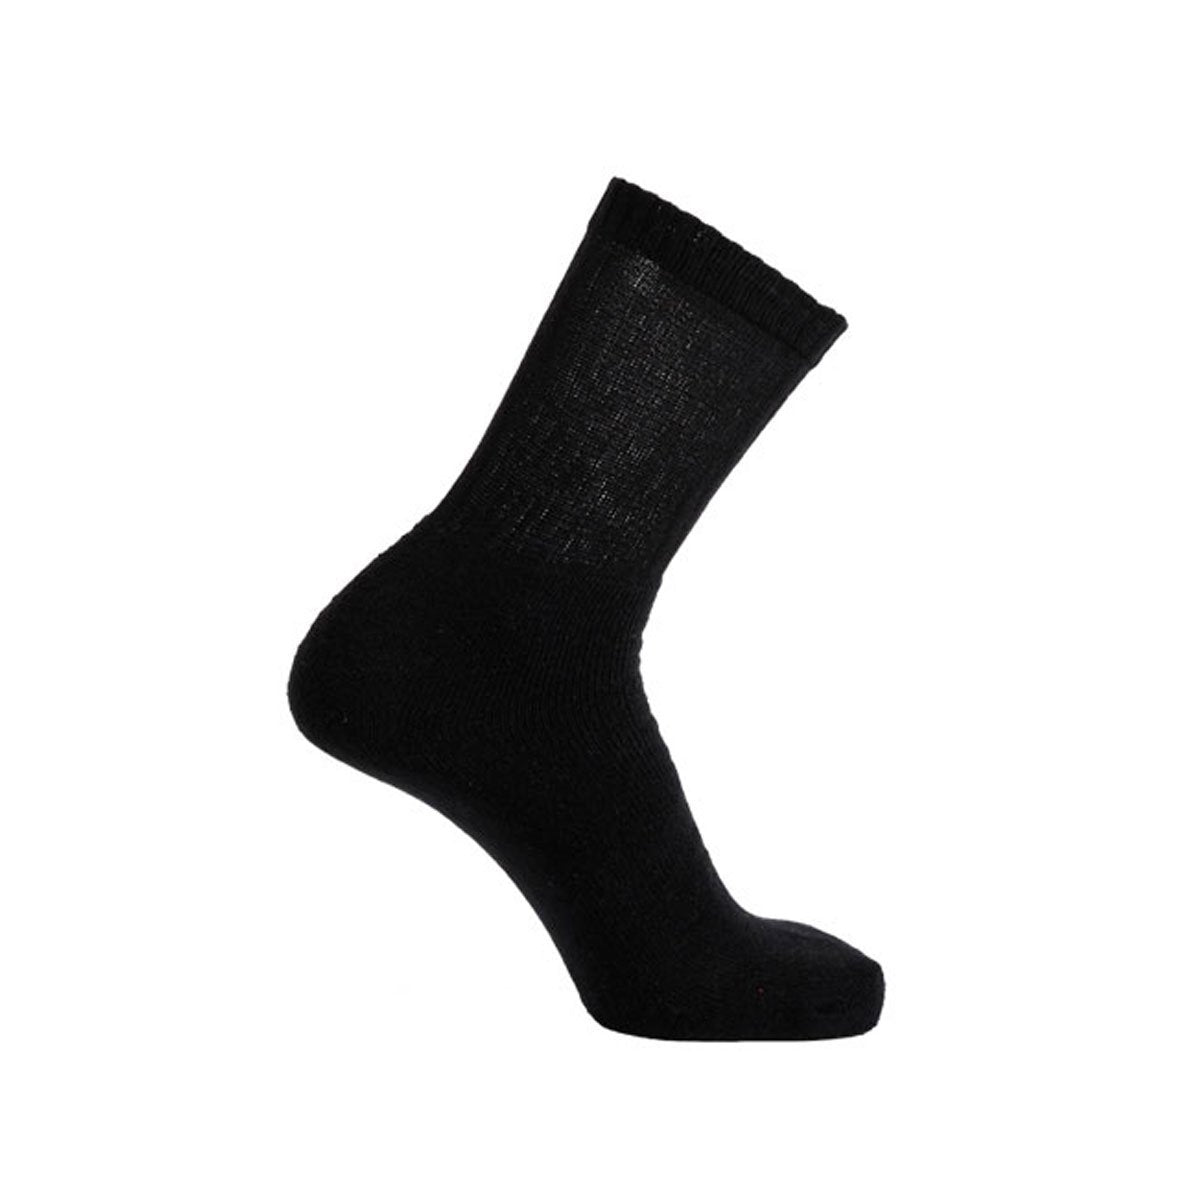 Multi Sport Crew Socks - Black - Pack of 5 1